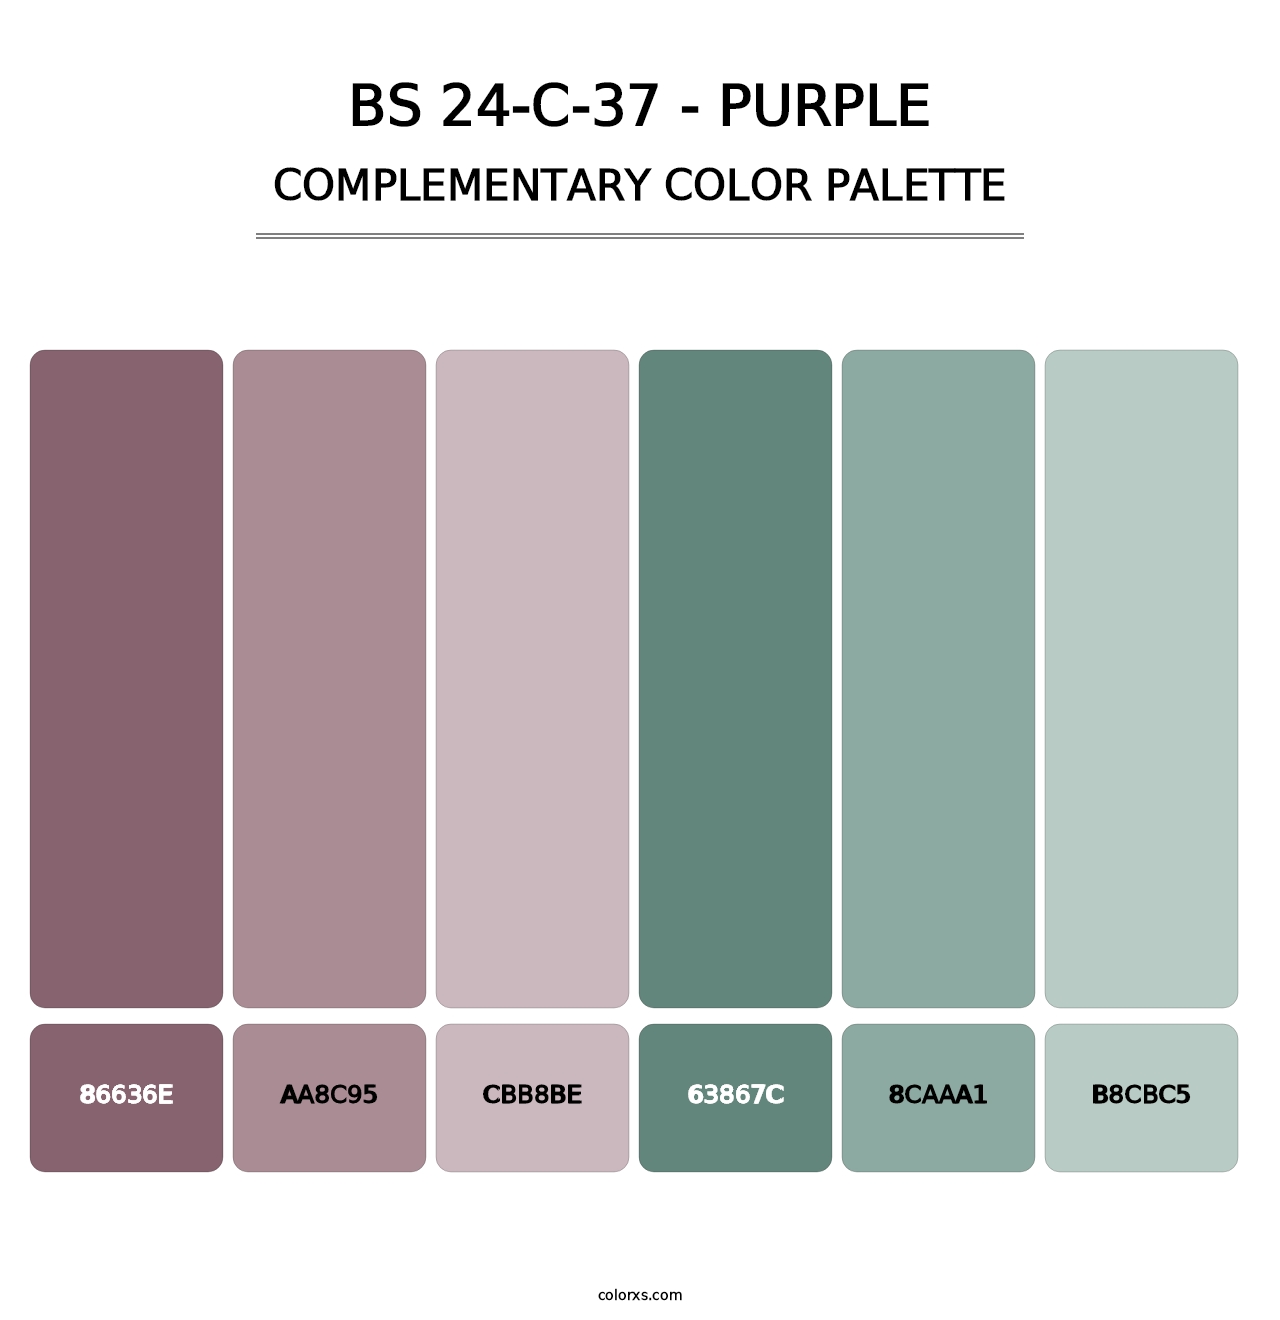 BS 24-C-37 - Purple - Complementary Color Palette